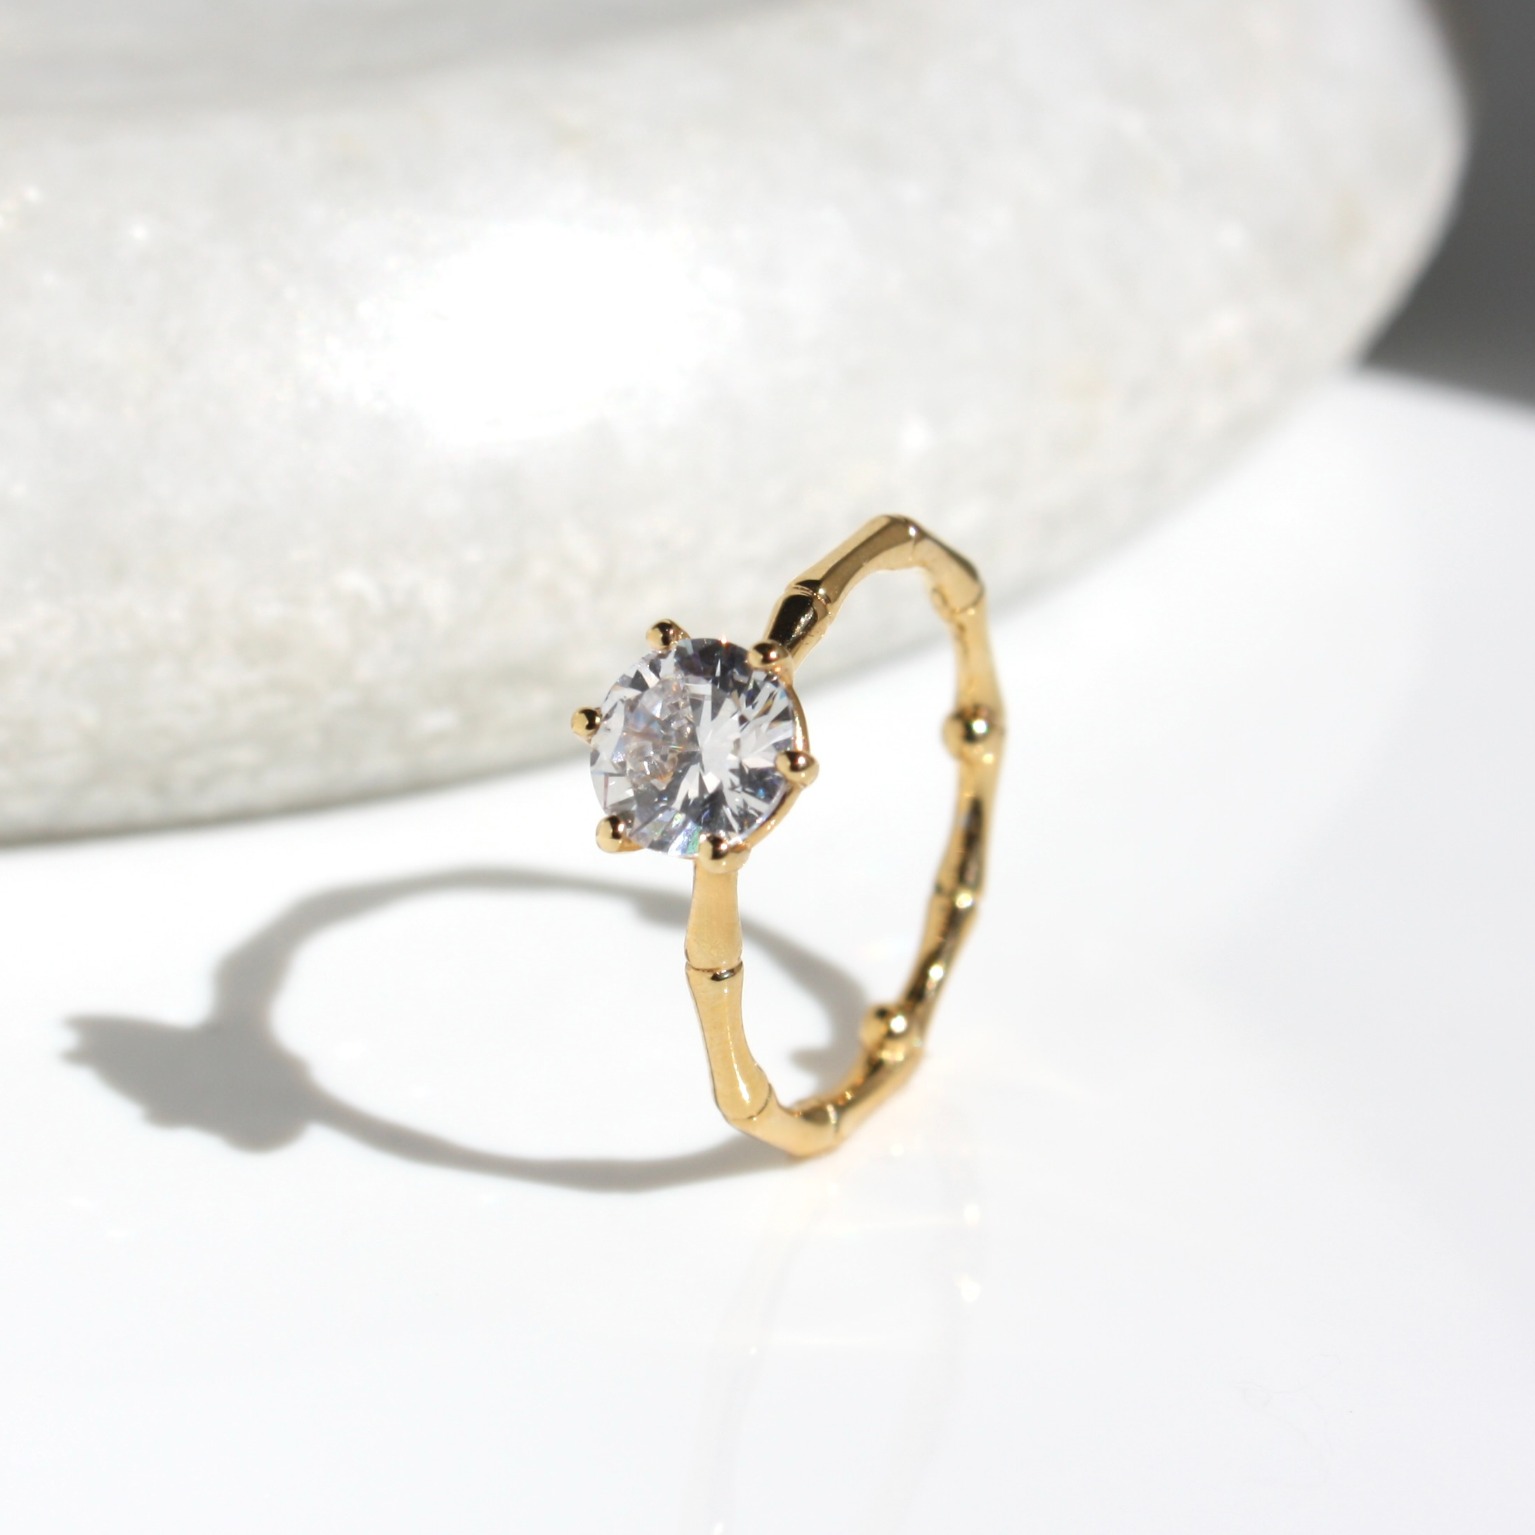 Round Brilliant Cut Sander Solitaire Diamond Ring, diamond ring, diamond engagement ring, engagement ring, round diamond, danielle camera jewellery